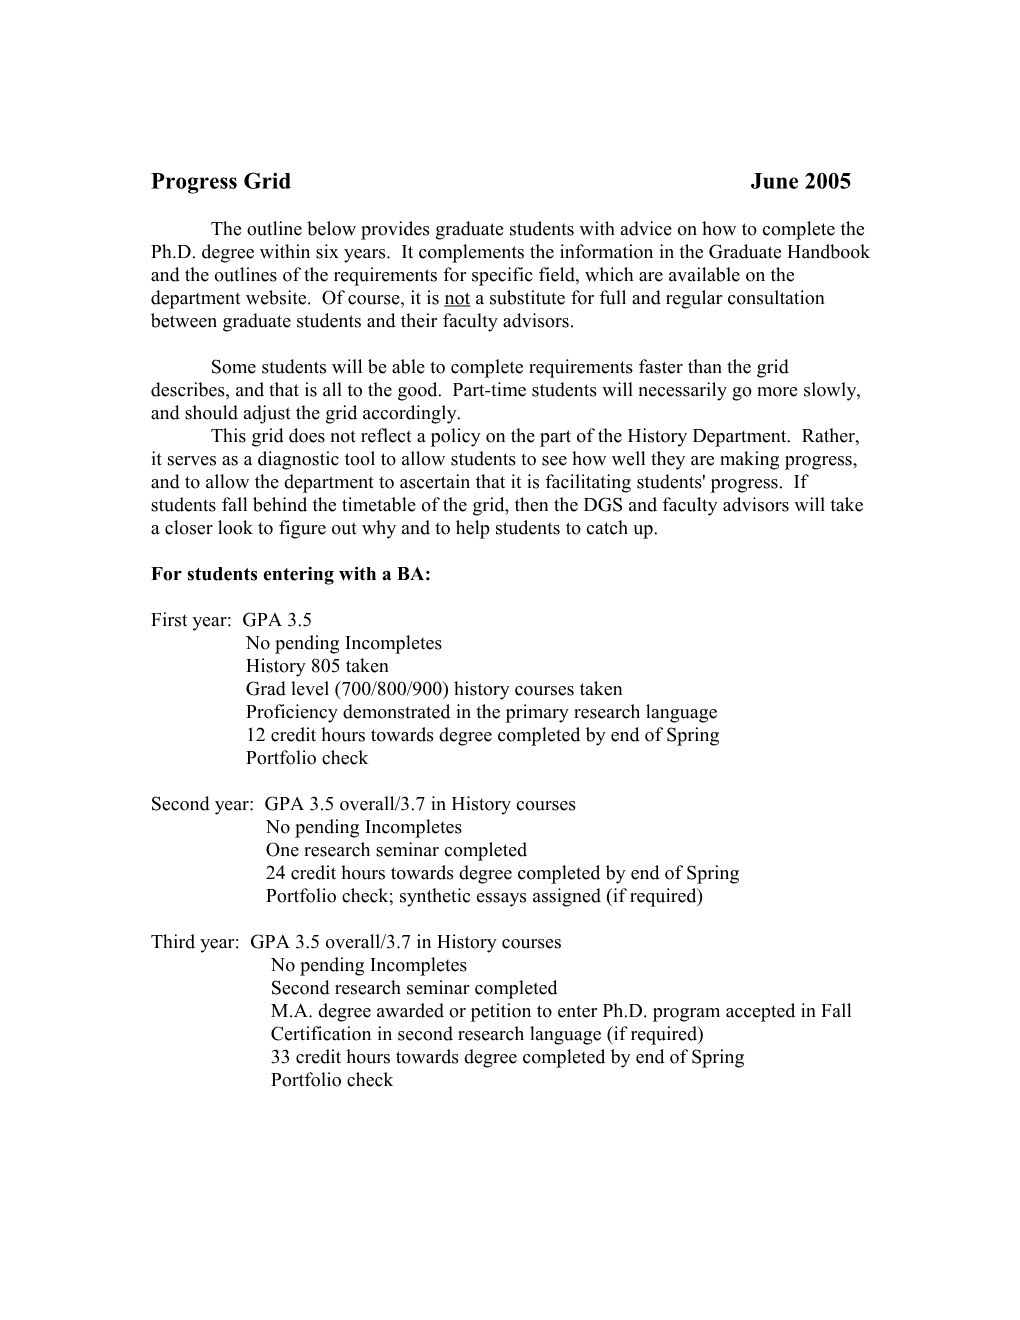 Progress Grid for Graduate Program (Draft)